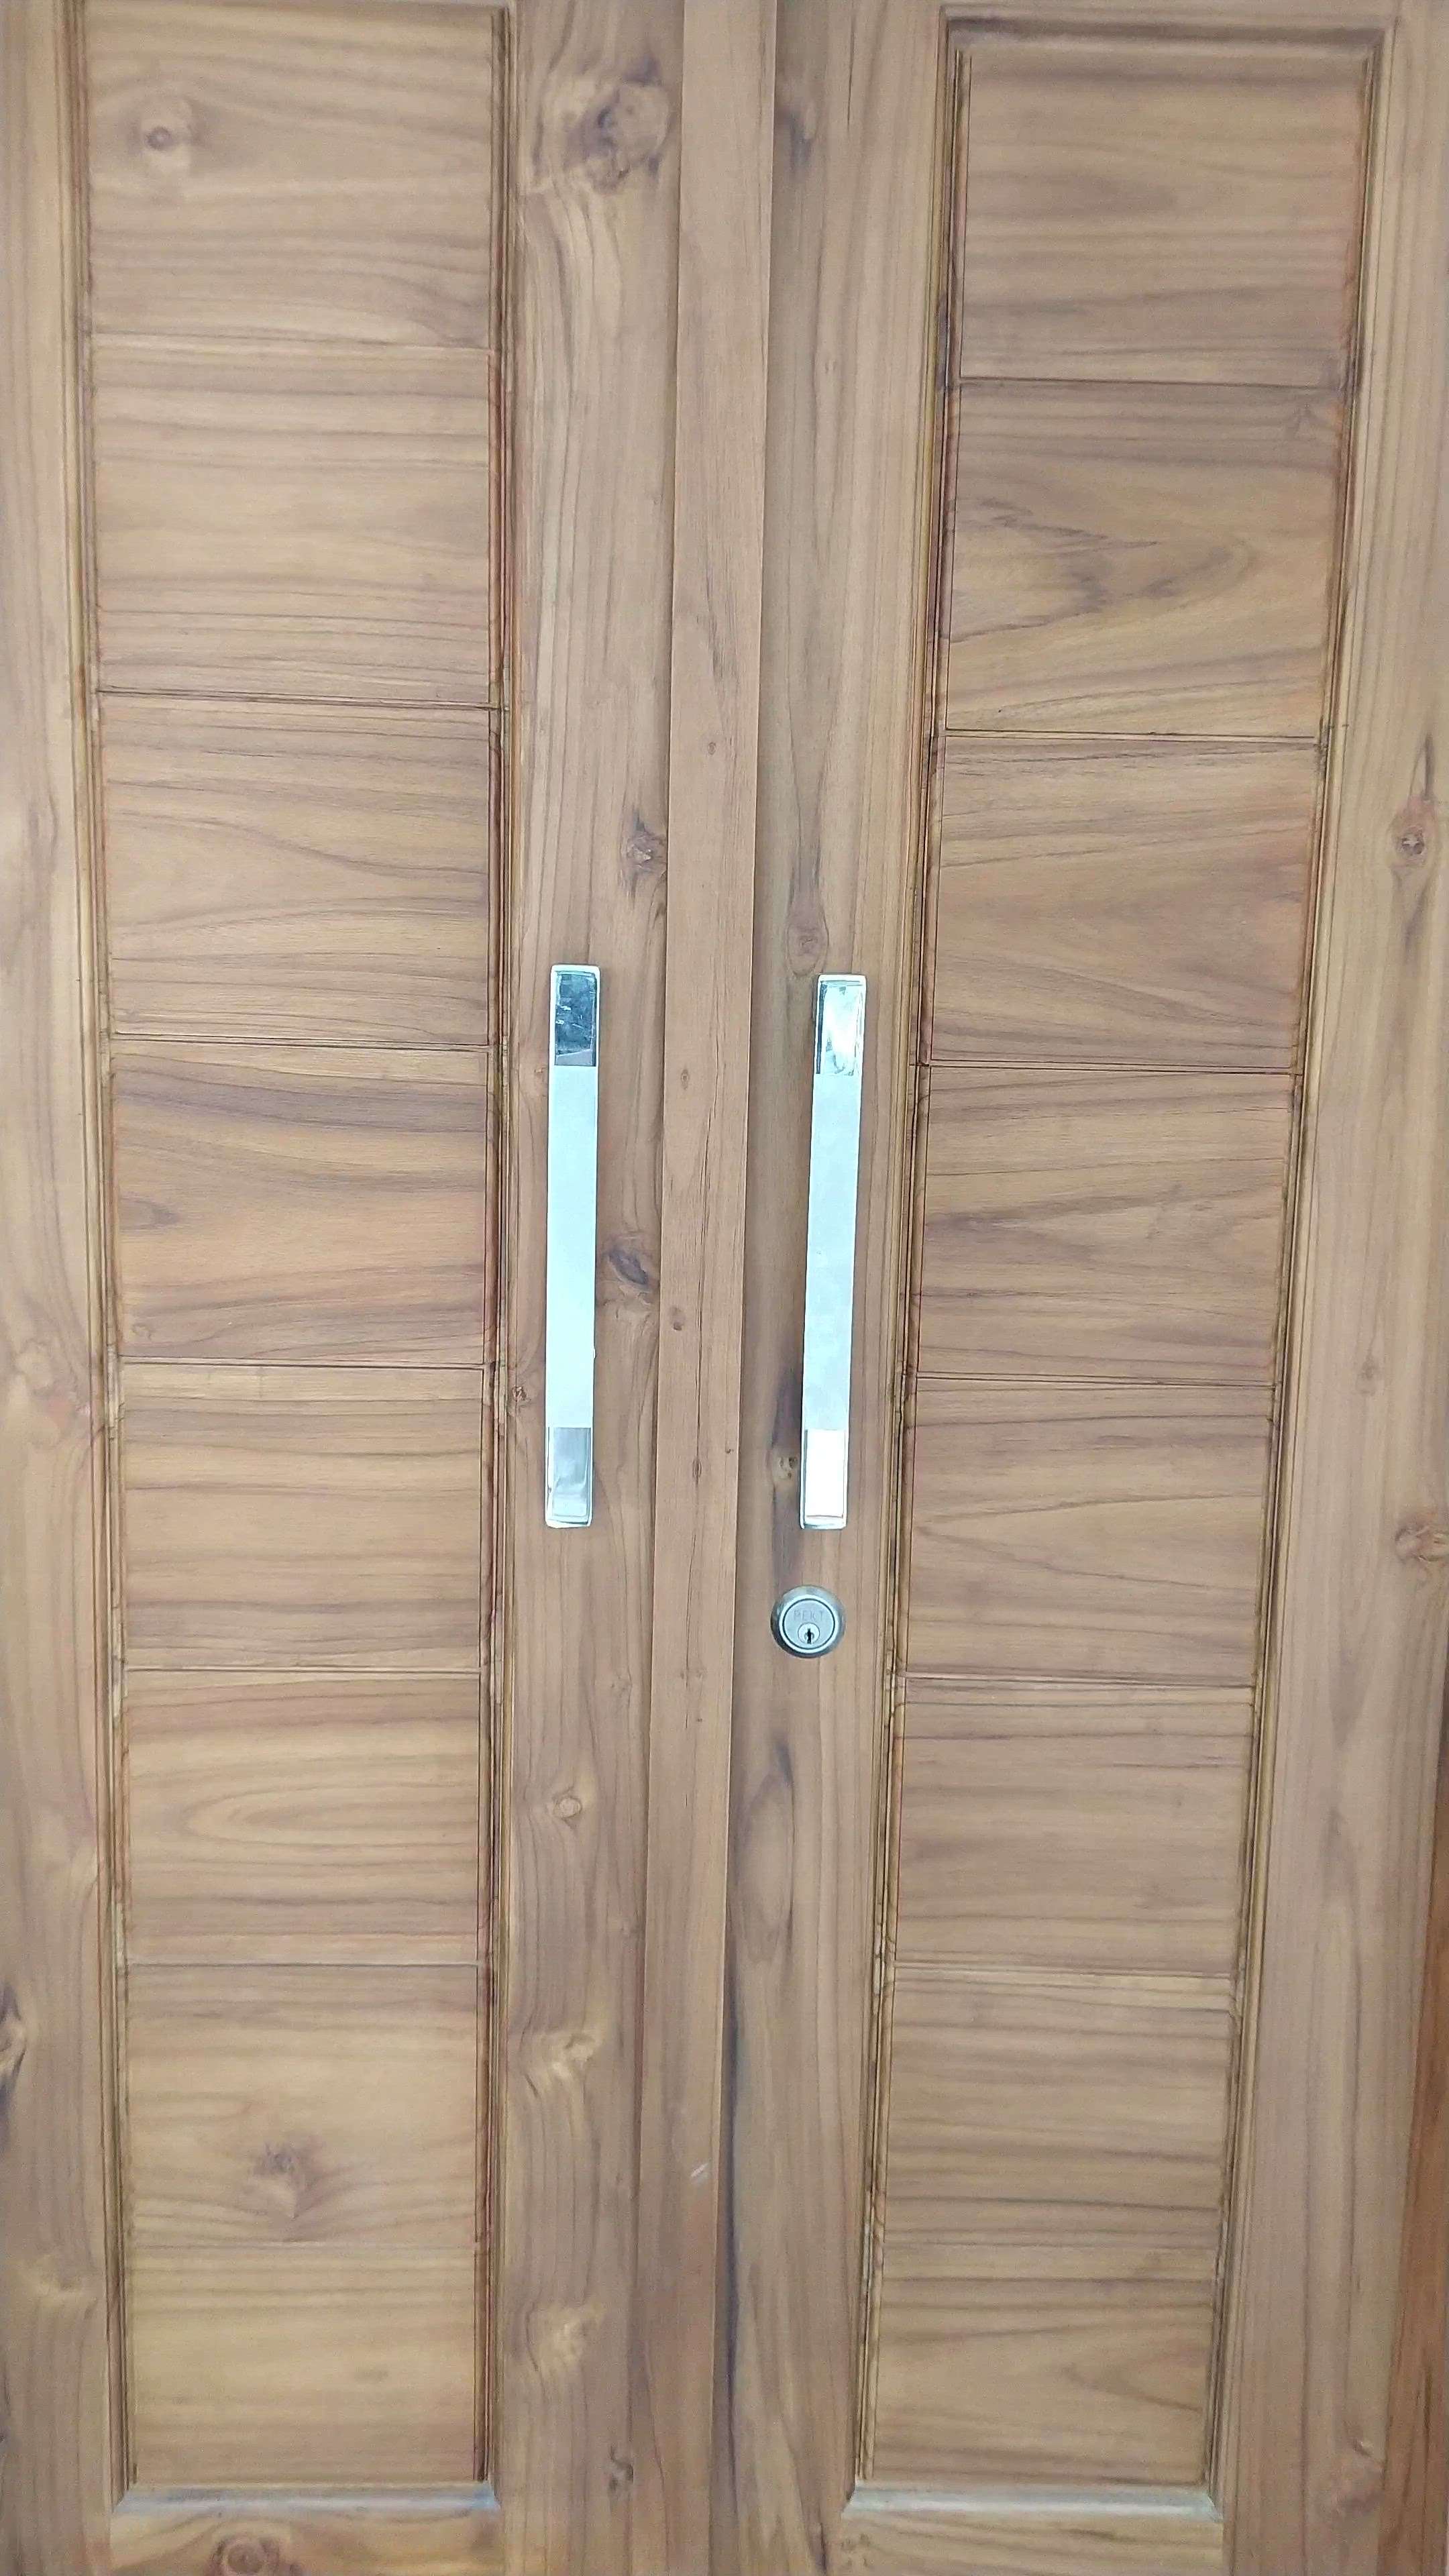 new project completed @pazhayannur thrissur#wooden door#interior wpc door#kitchen#wardrobe#wpc#